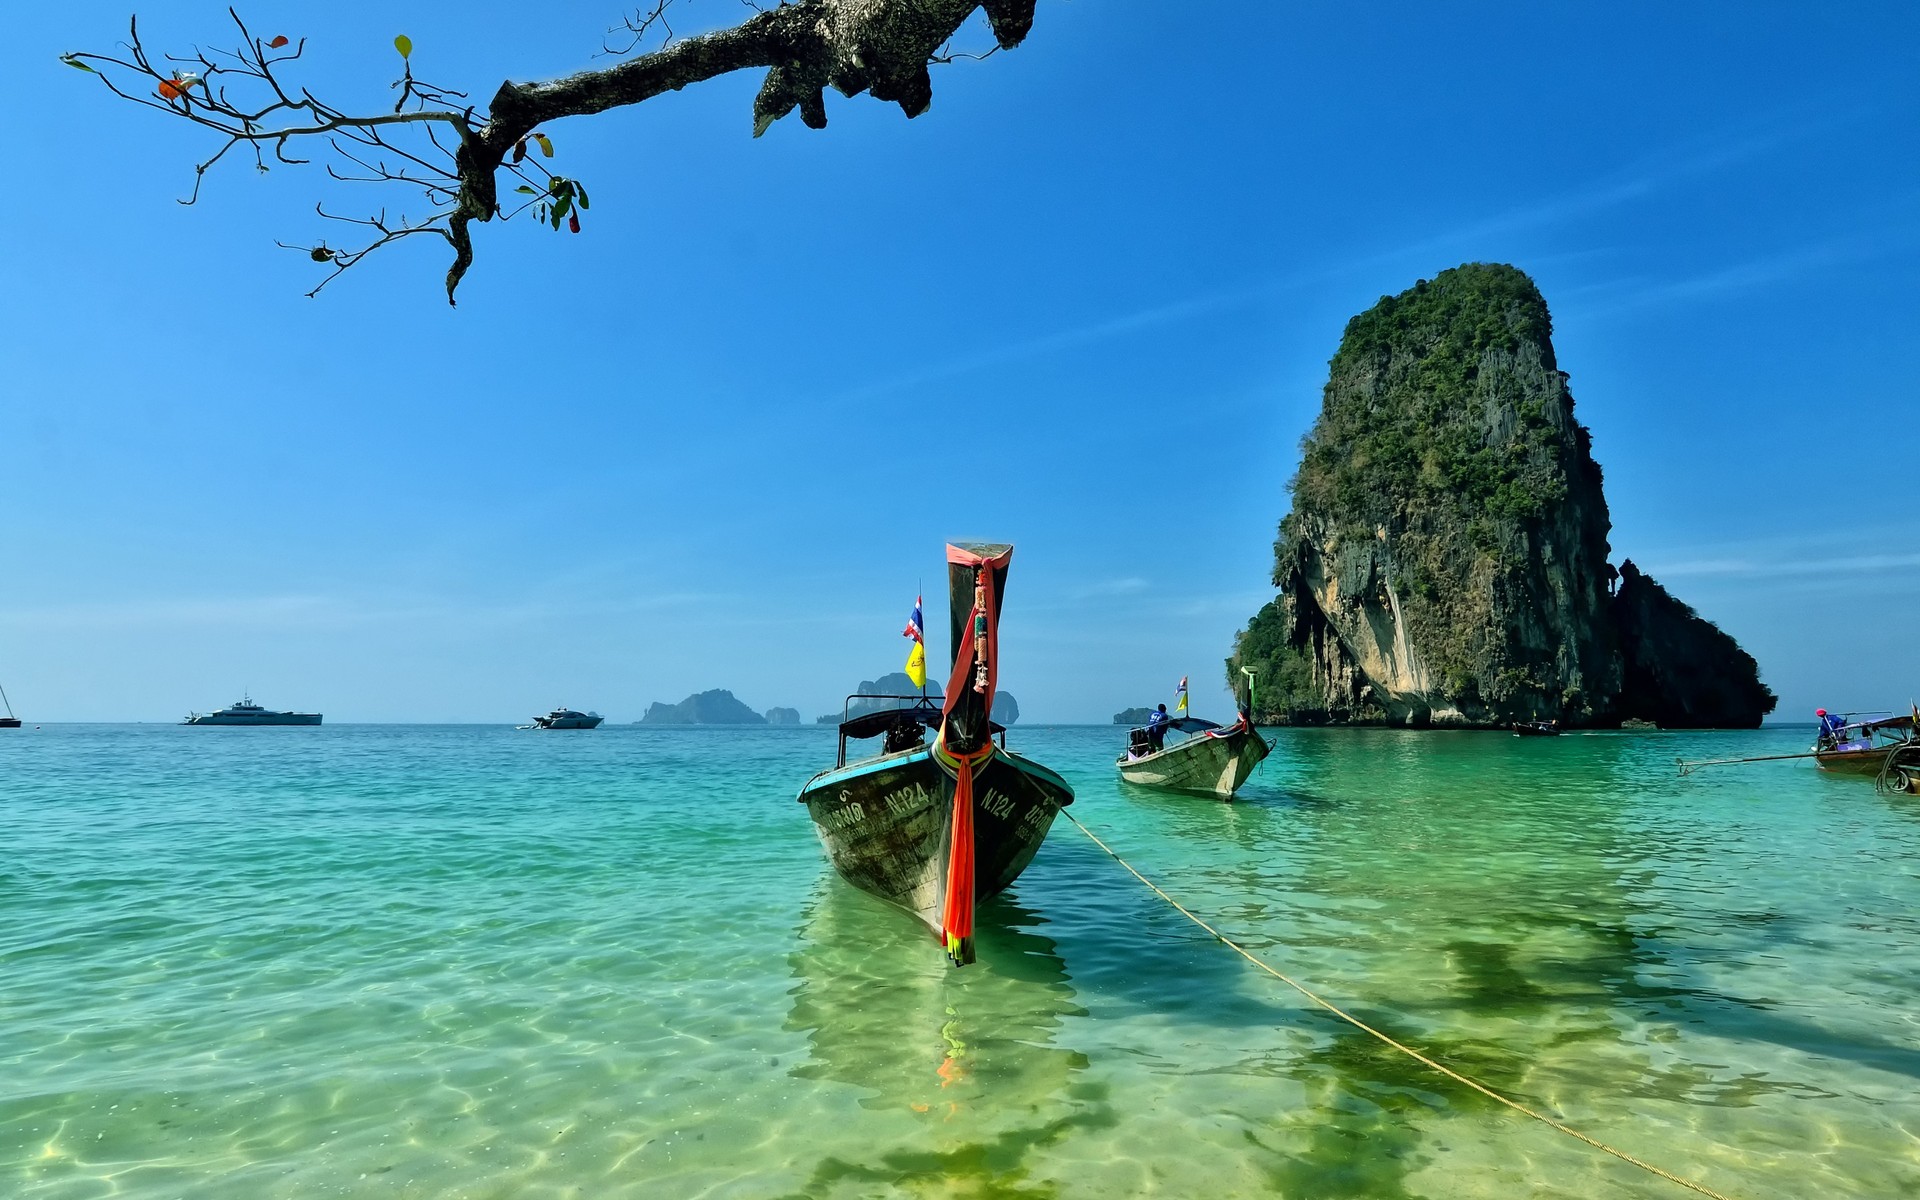 Thajské ostrovy